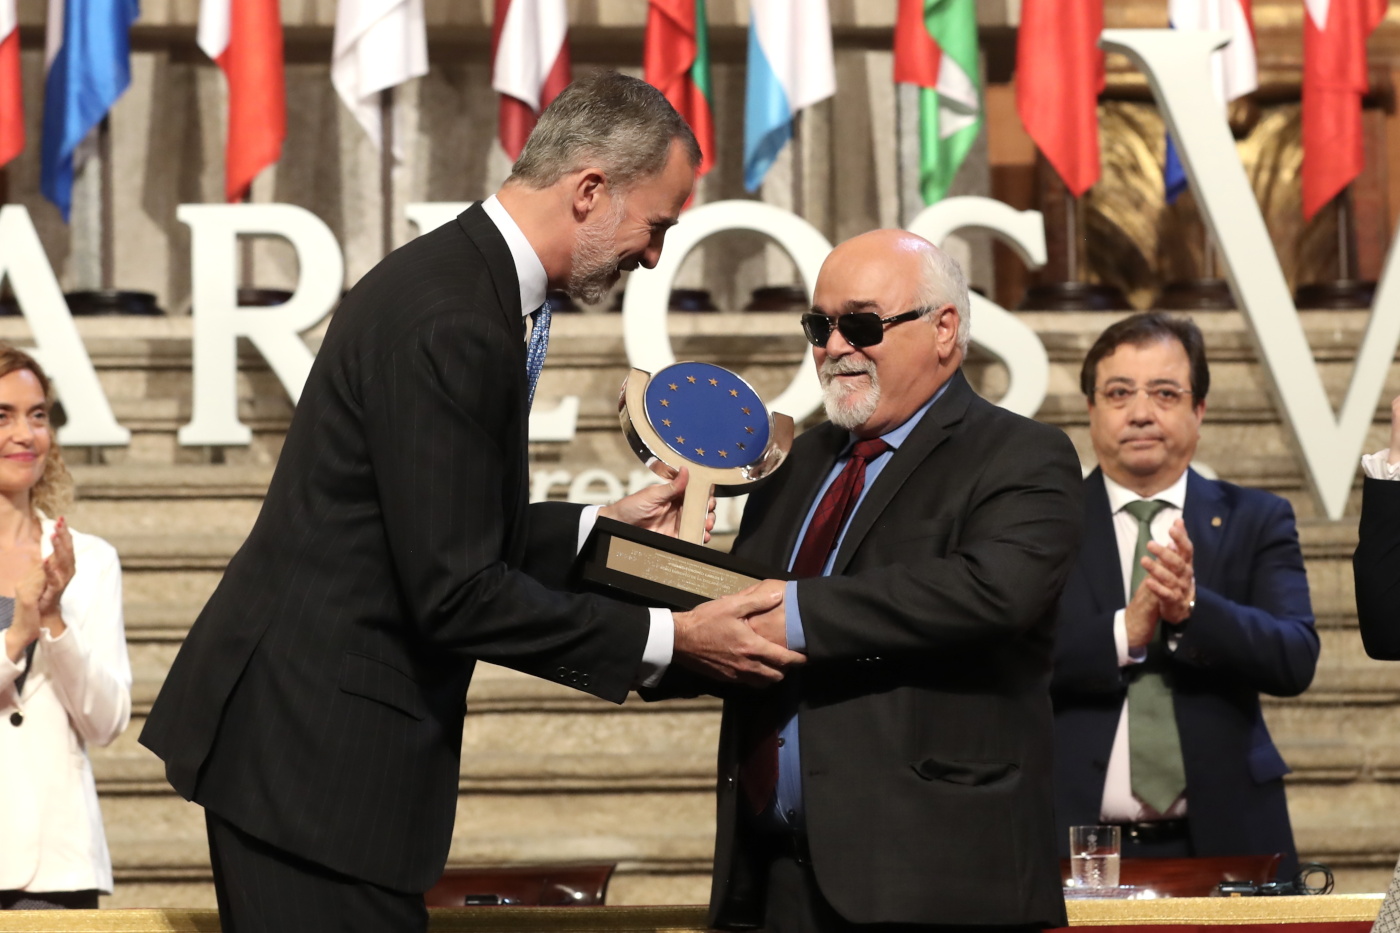 Premio Europeo Carlos V Extremadura